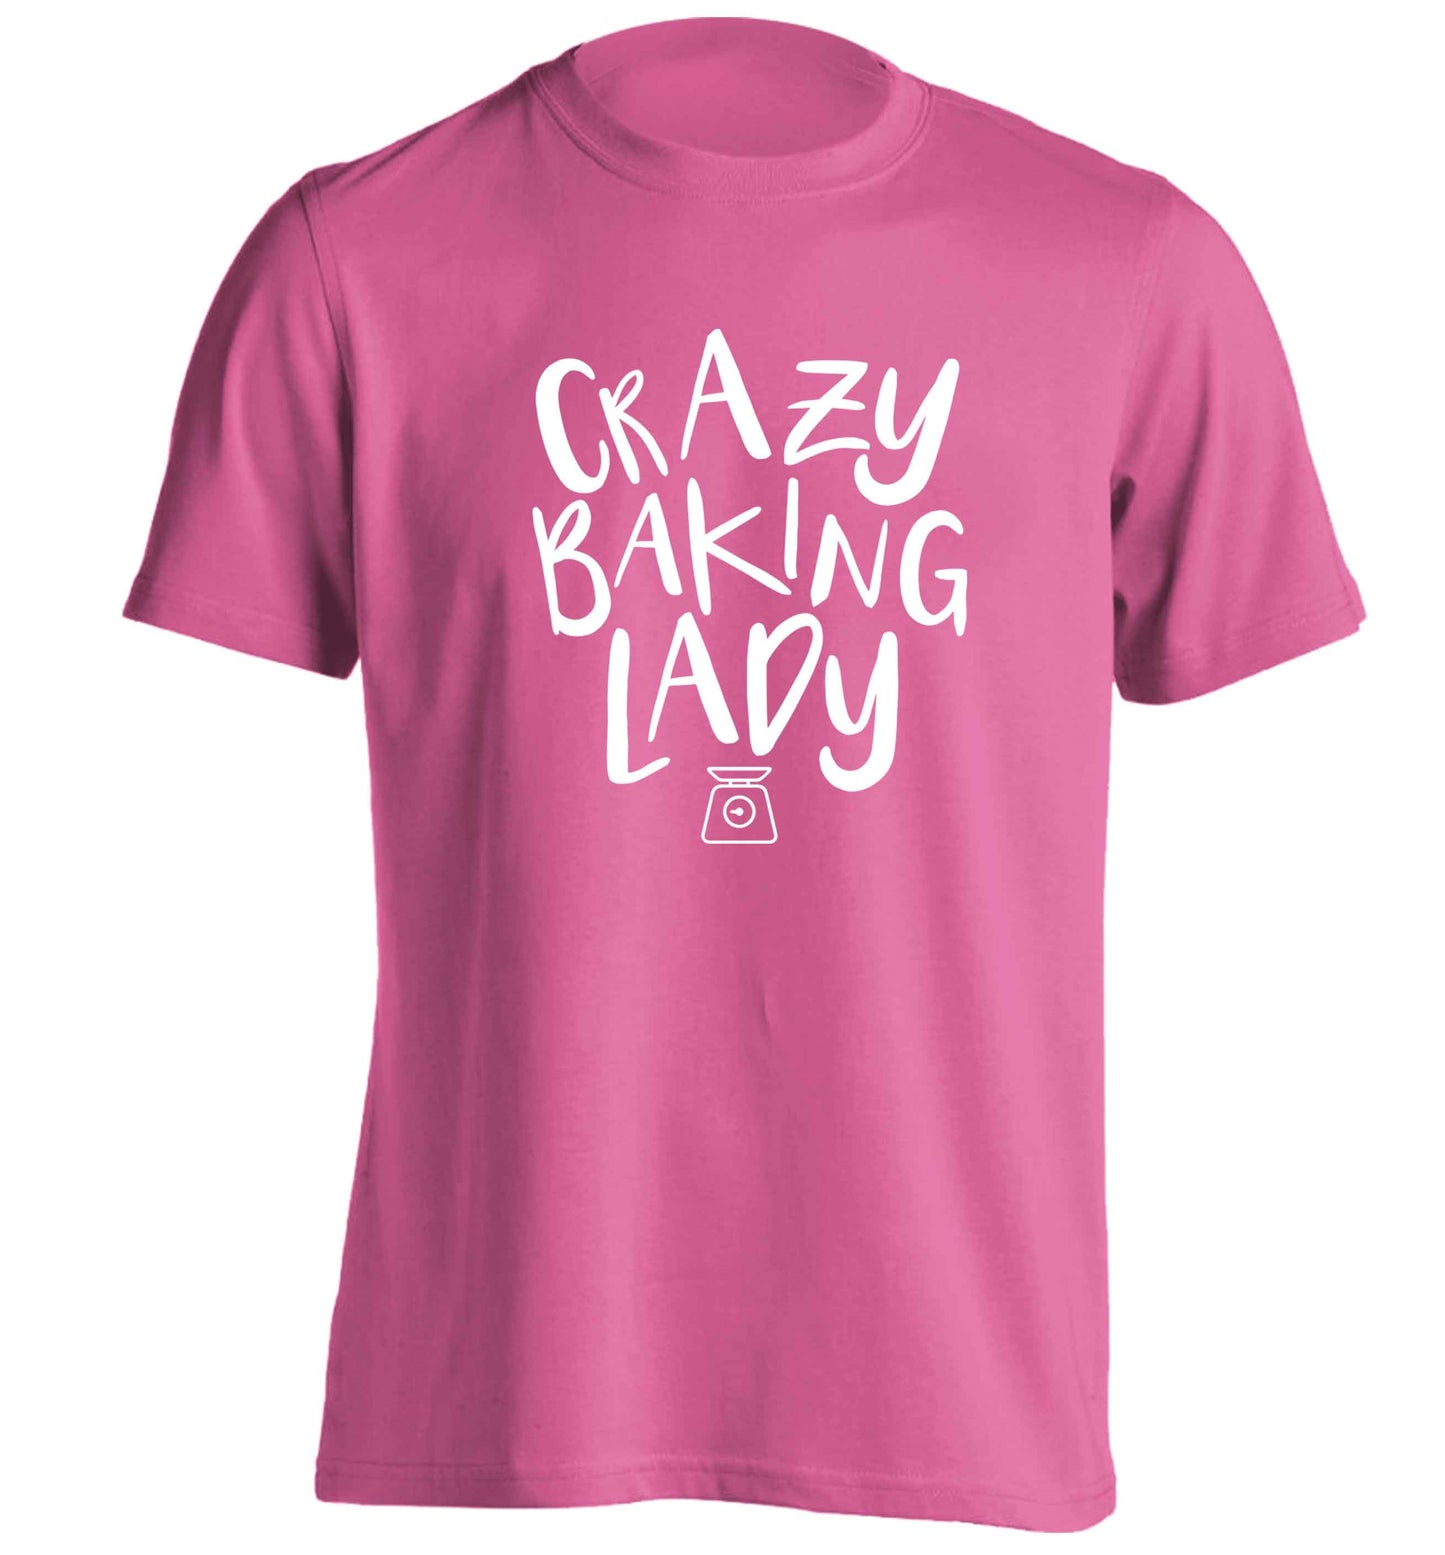 Crazy baking lady adults unisex pink Tshirt 2XL